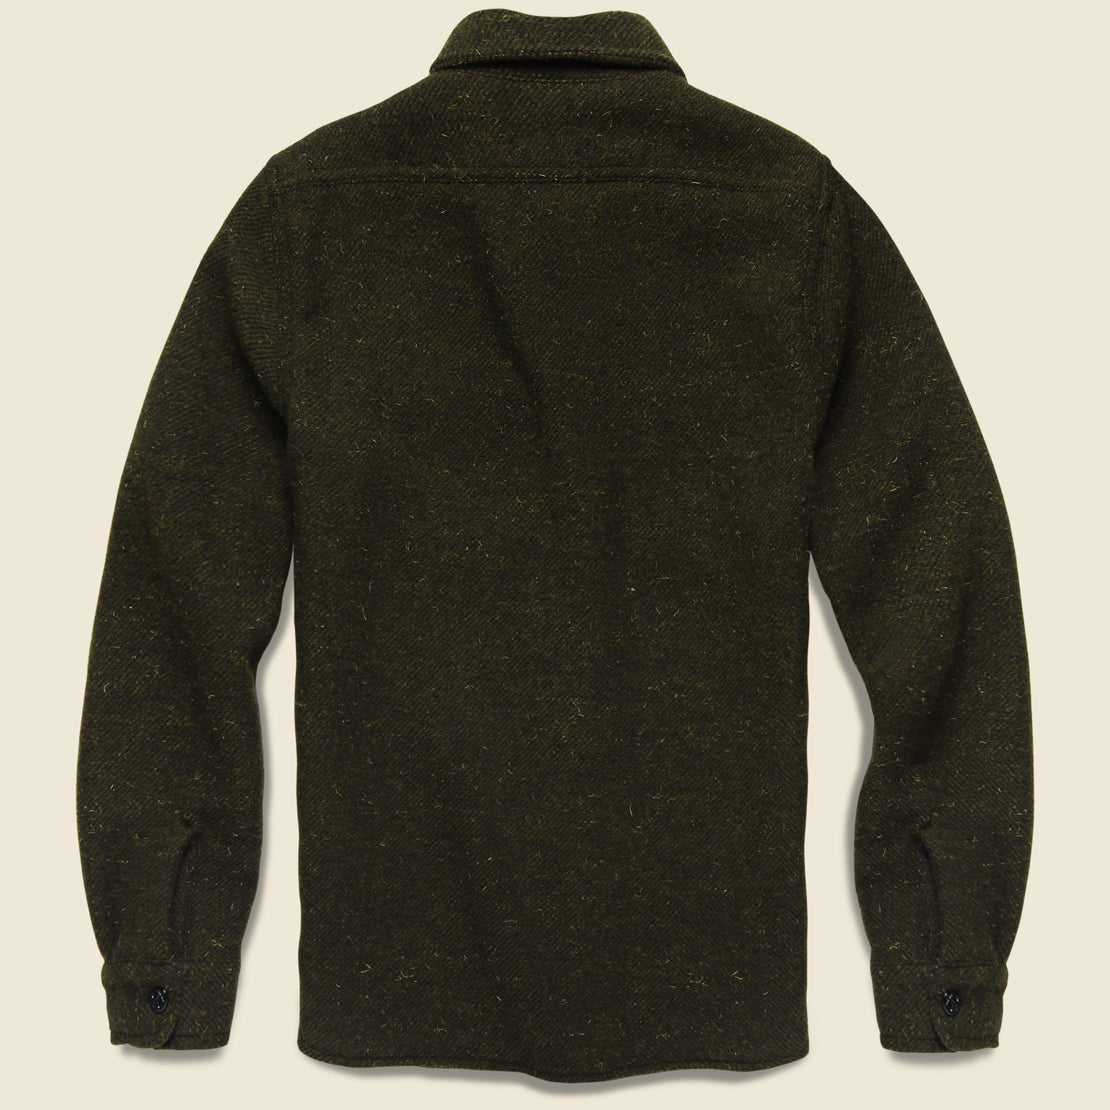 Hall CPO Overshirt - Olive Tweed